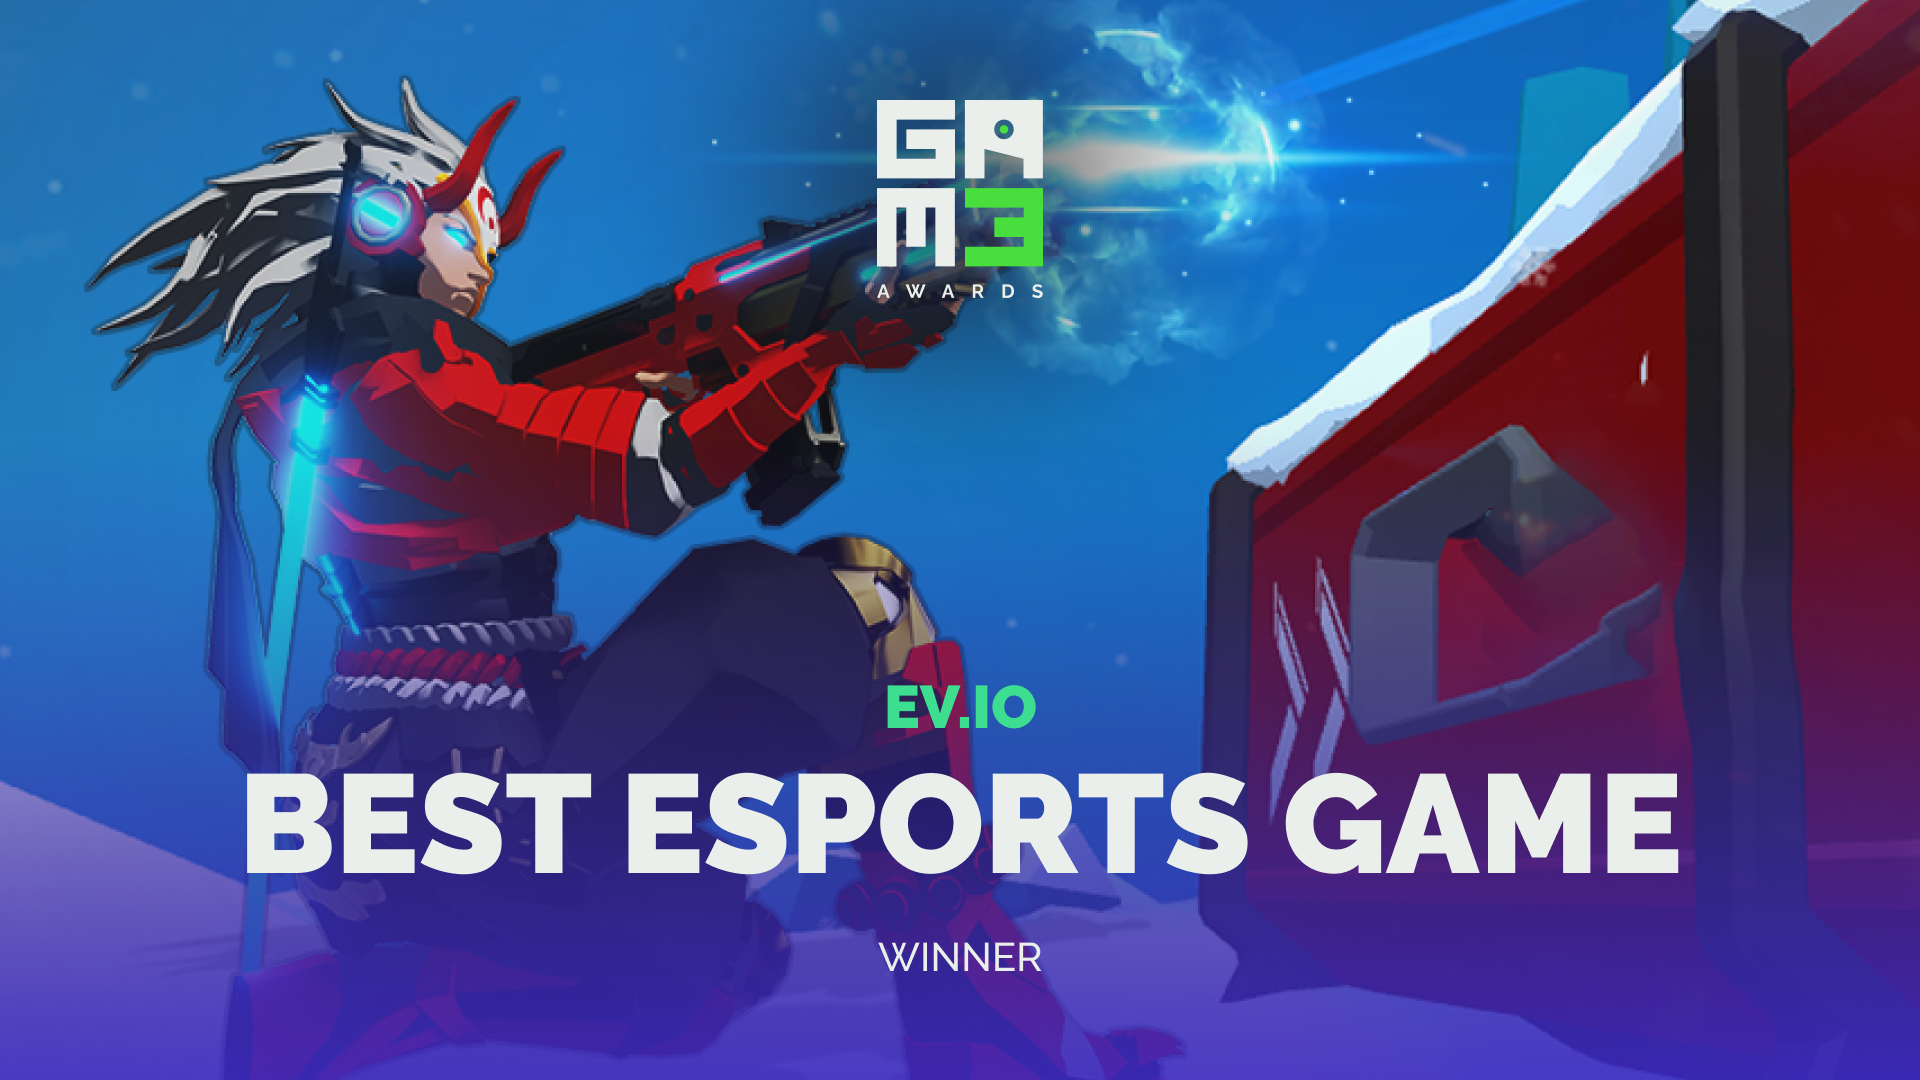 winner_ev.io_best esports game.png